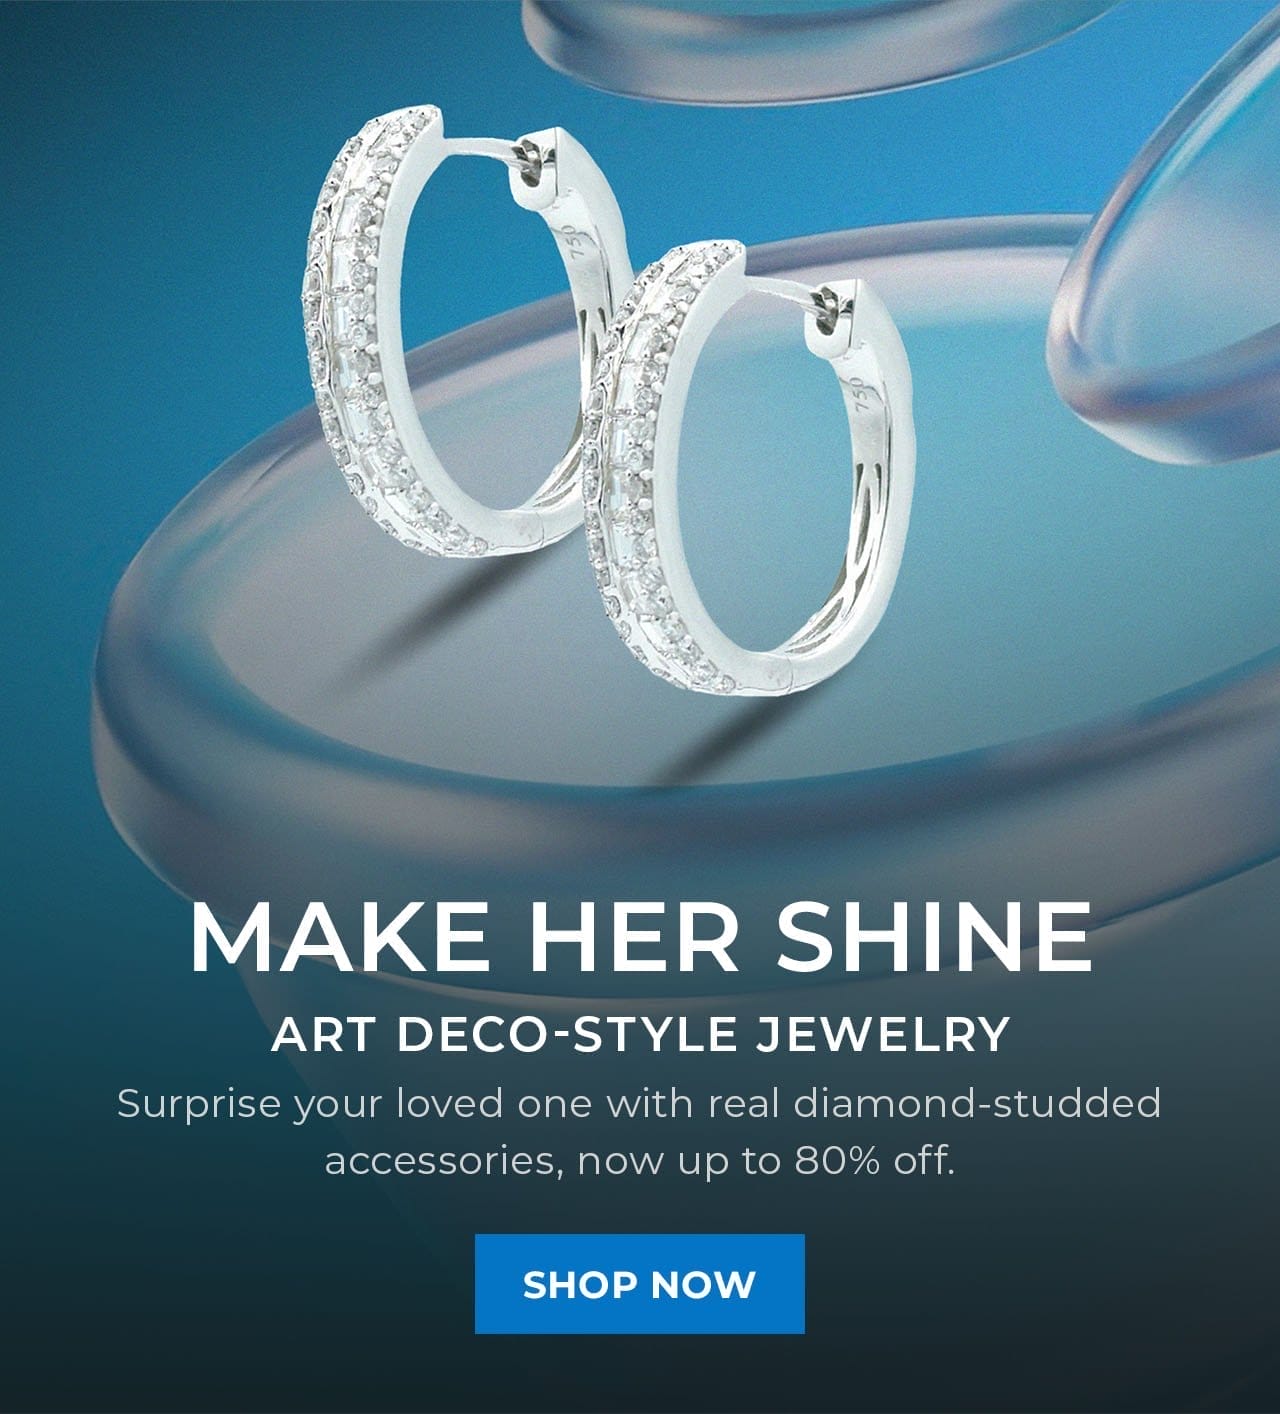 Art Deco-Style Jewelry | SHOP NOW